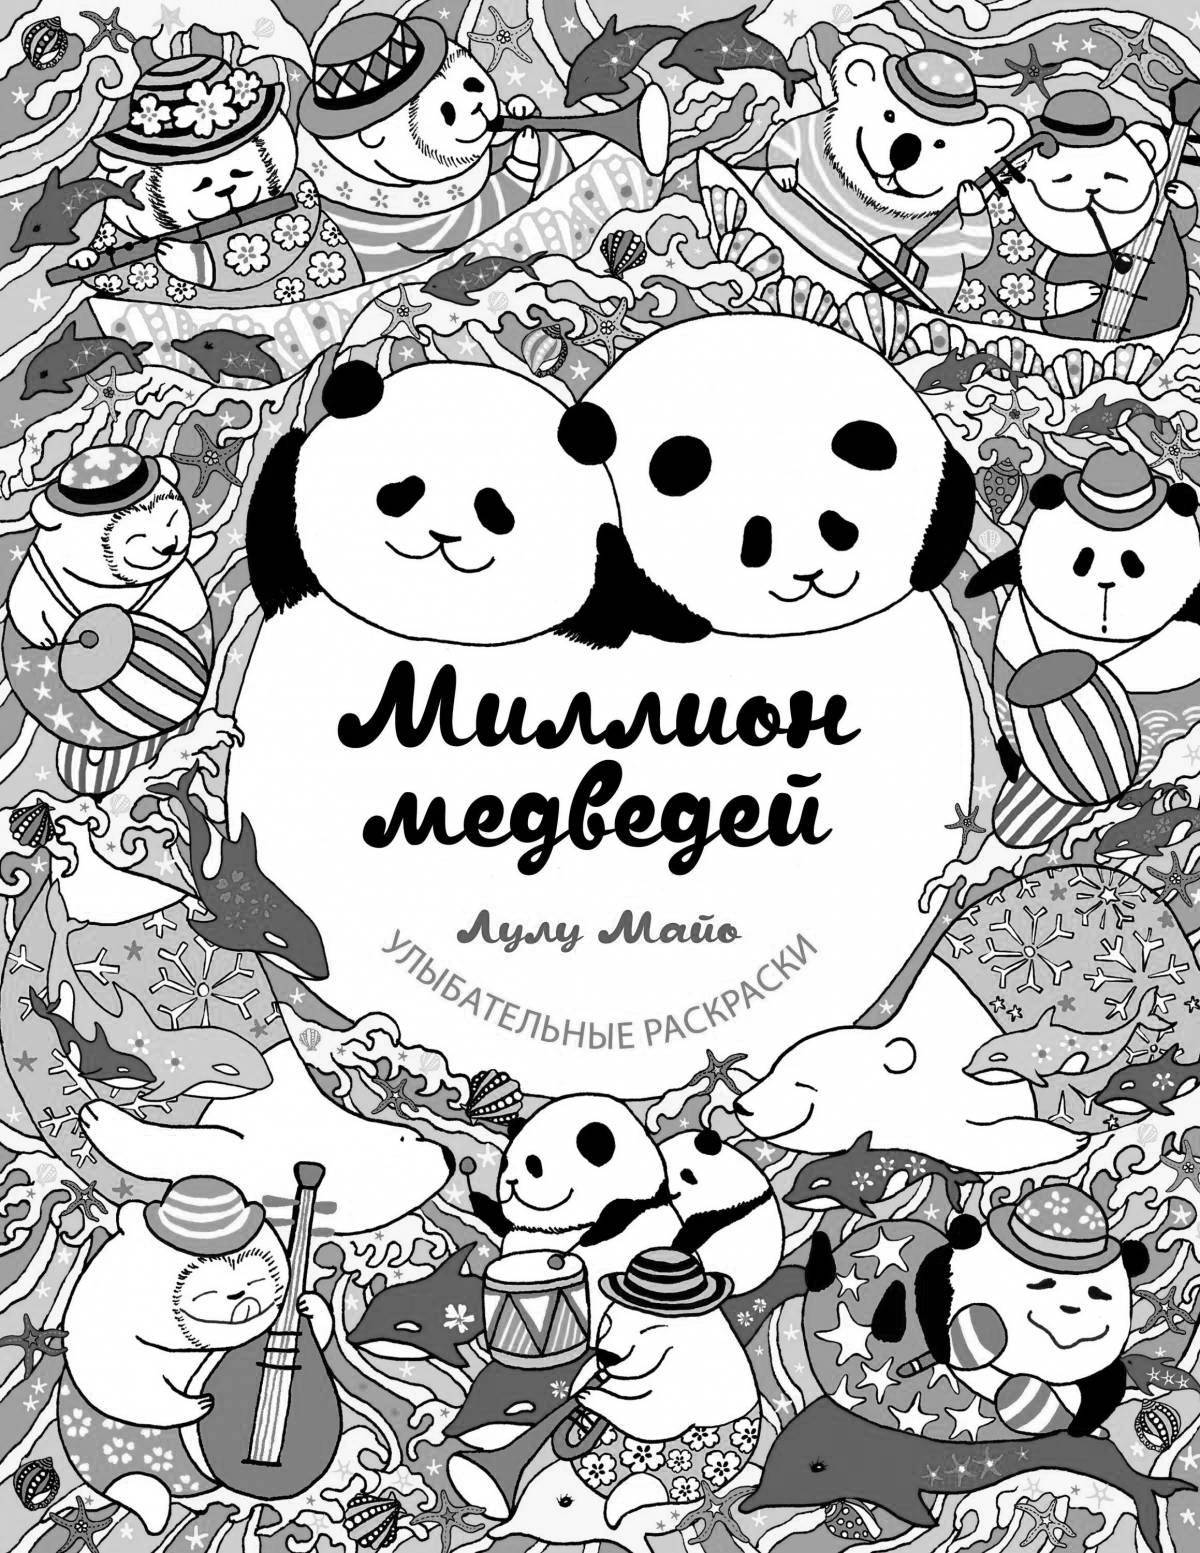 Million bears incredible coloring book